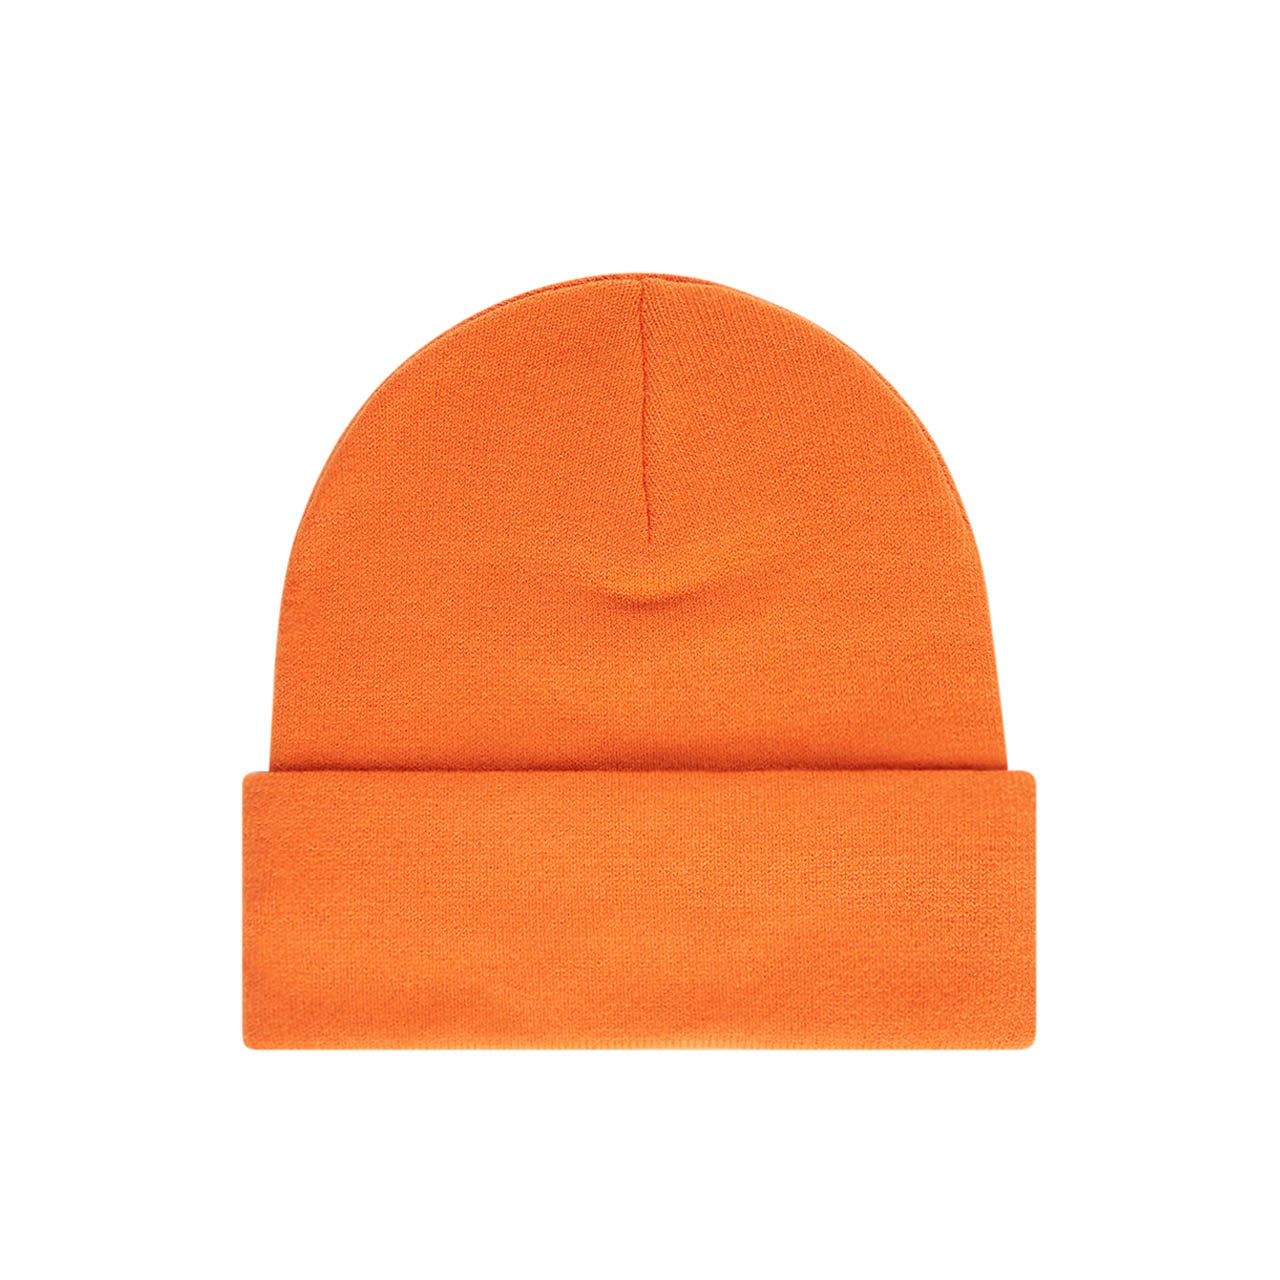 aries 'no problemo' mütze (orange)